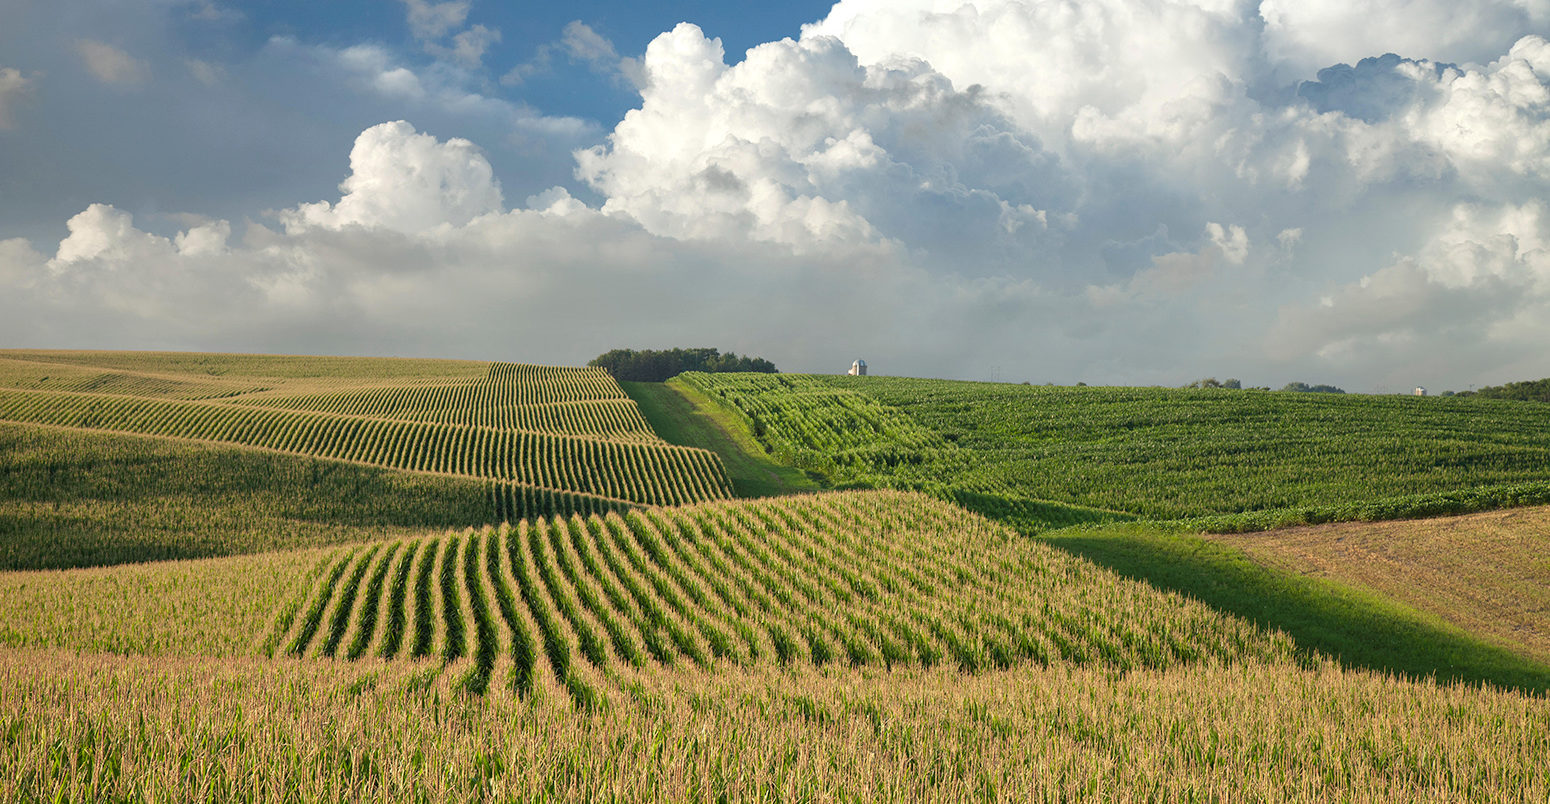 Corn and soybean fields in Minnesota. Credit: Daniel Thornberg / Alamy Stock Photo K25MCB